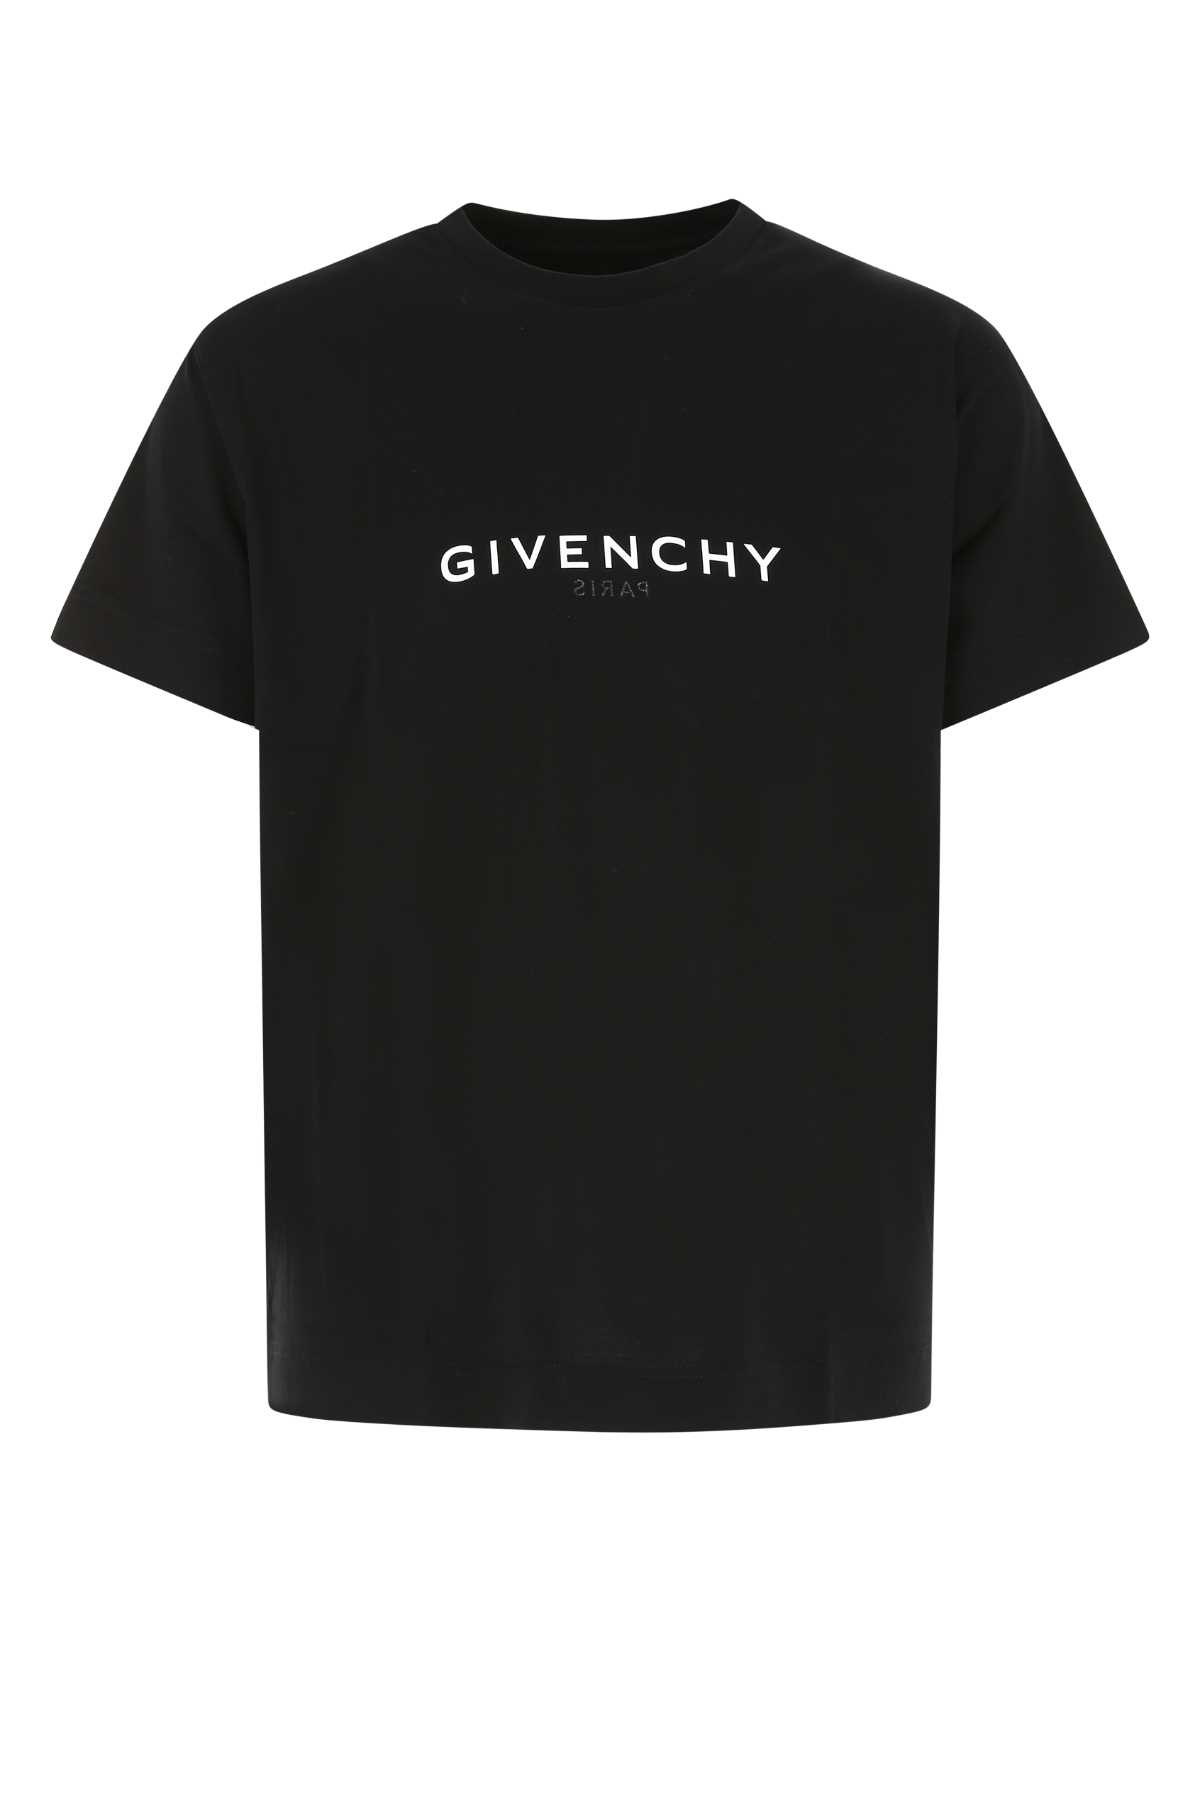 Givenchy Black Cotton Oversize T-shirt